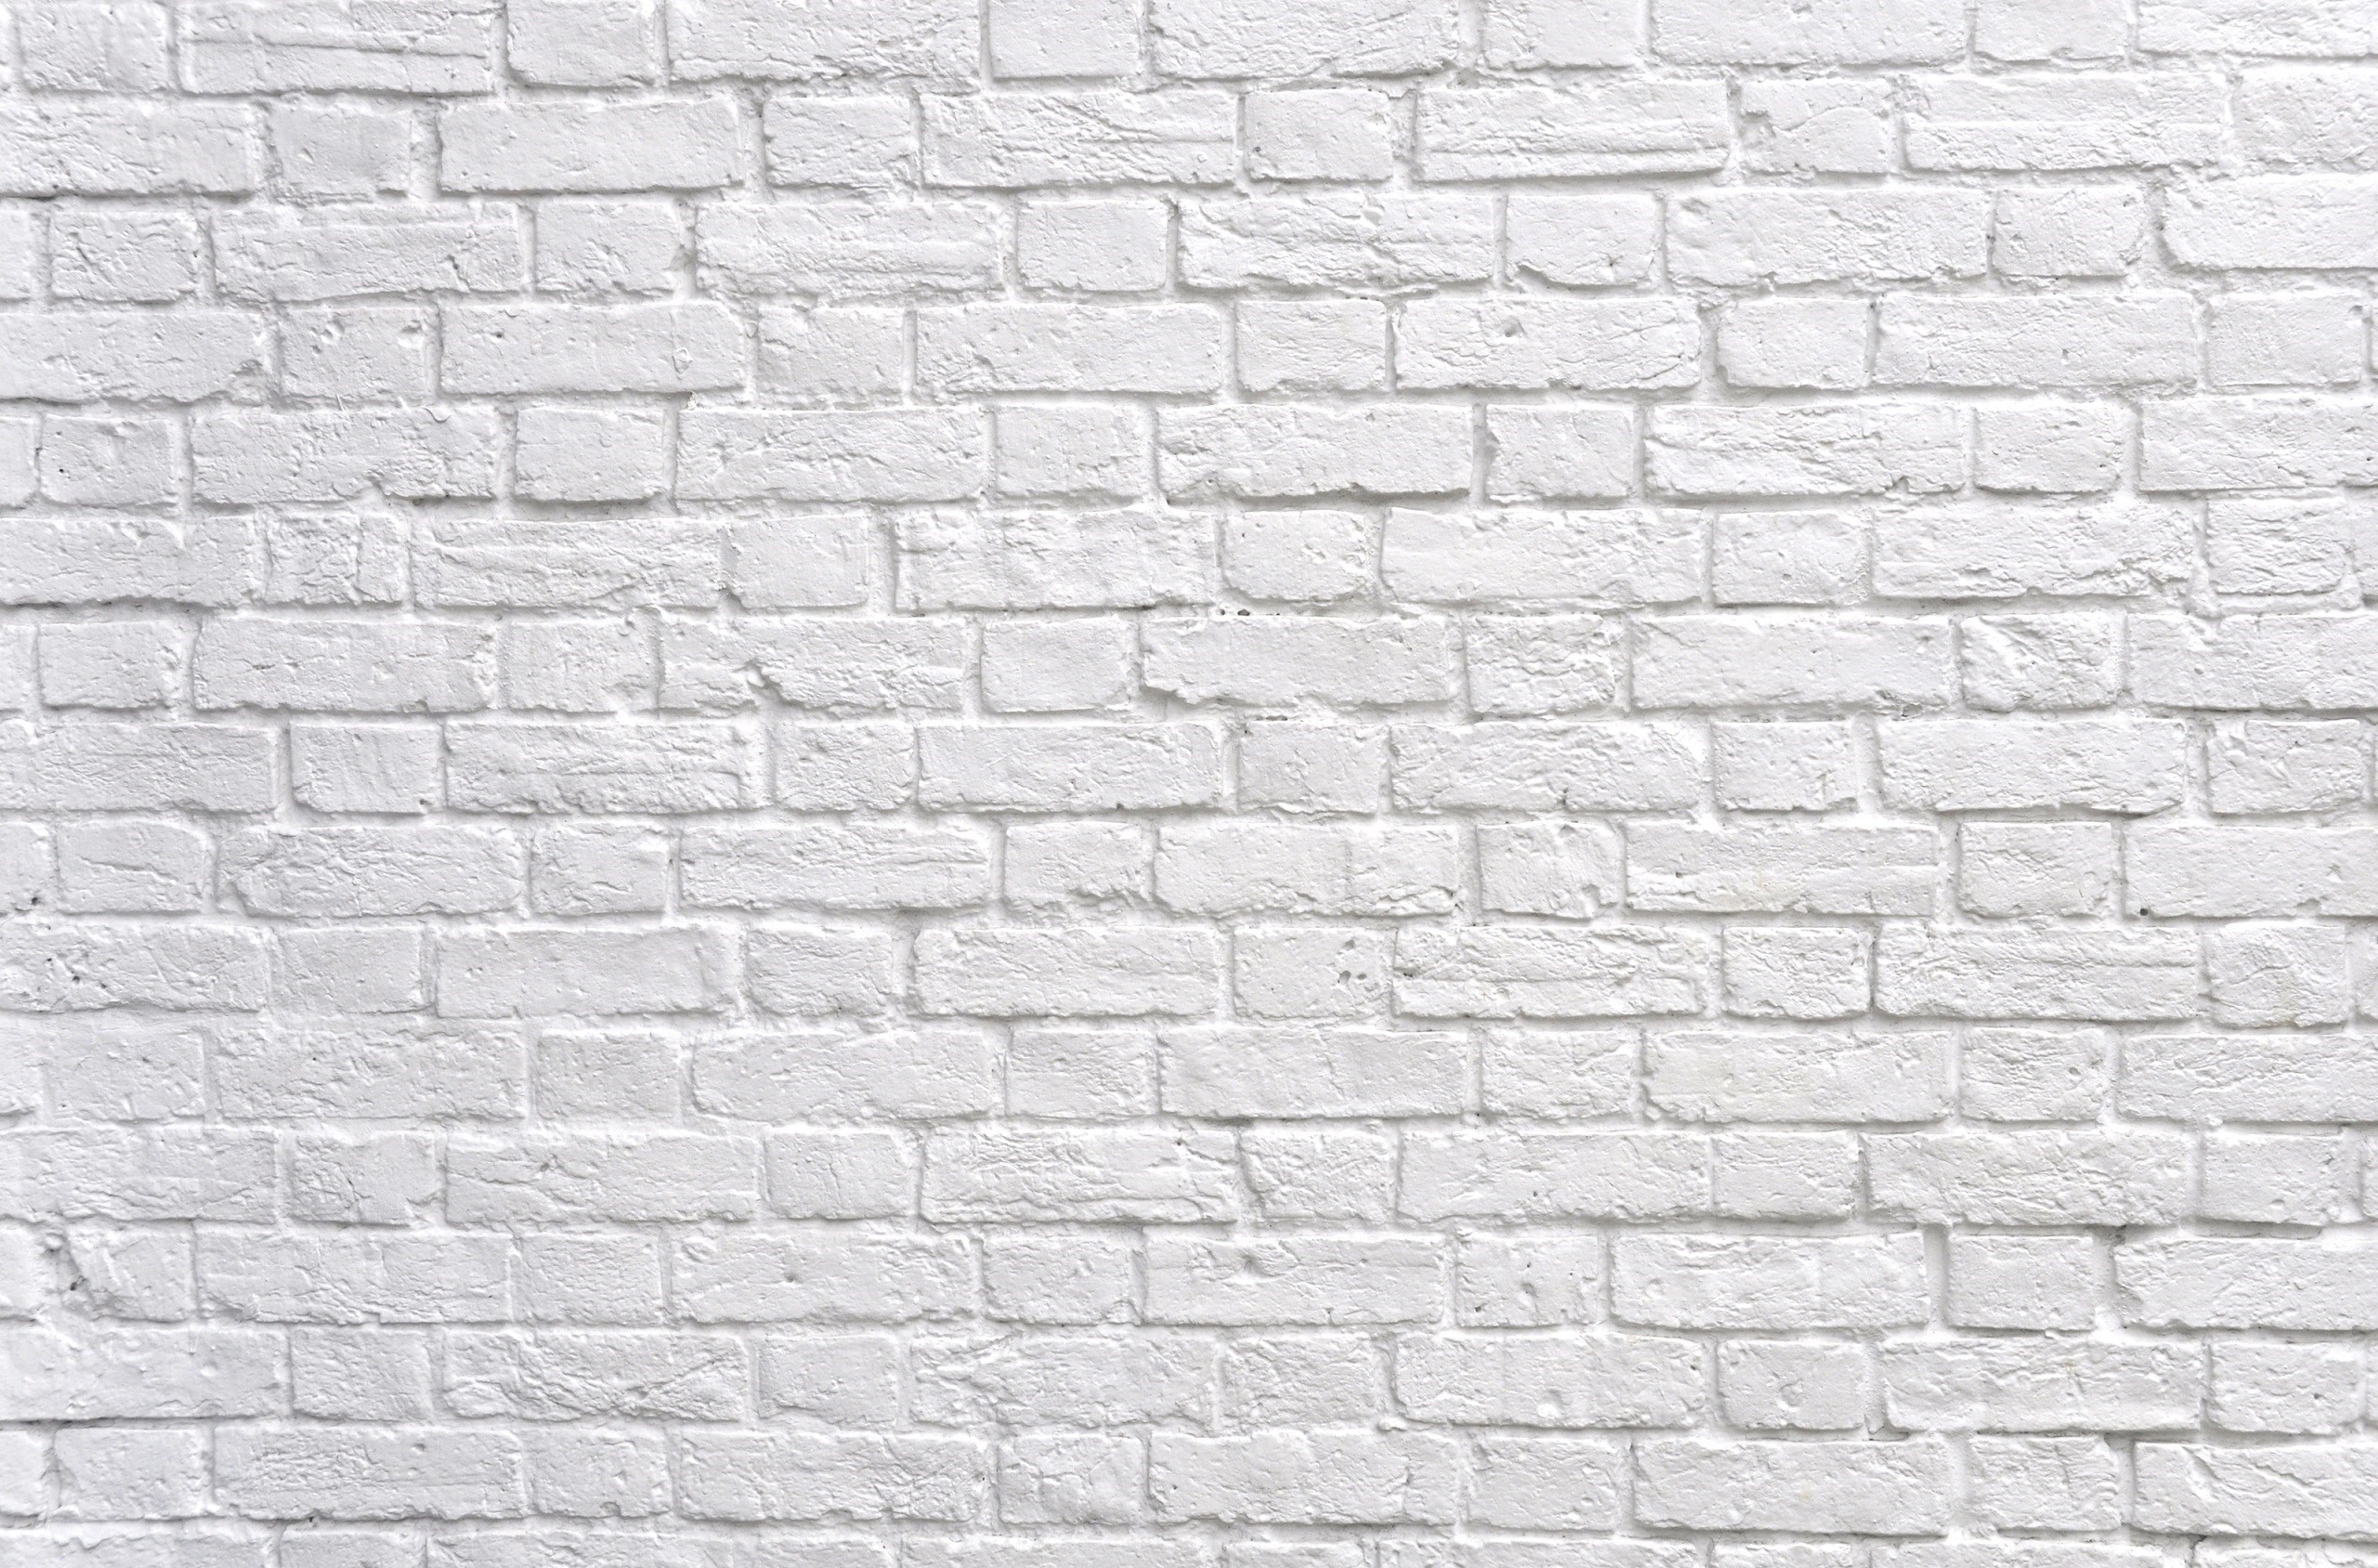 Black And White Brick Wall Background White Brick Wall Image Decoration